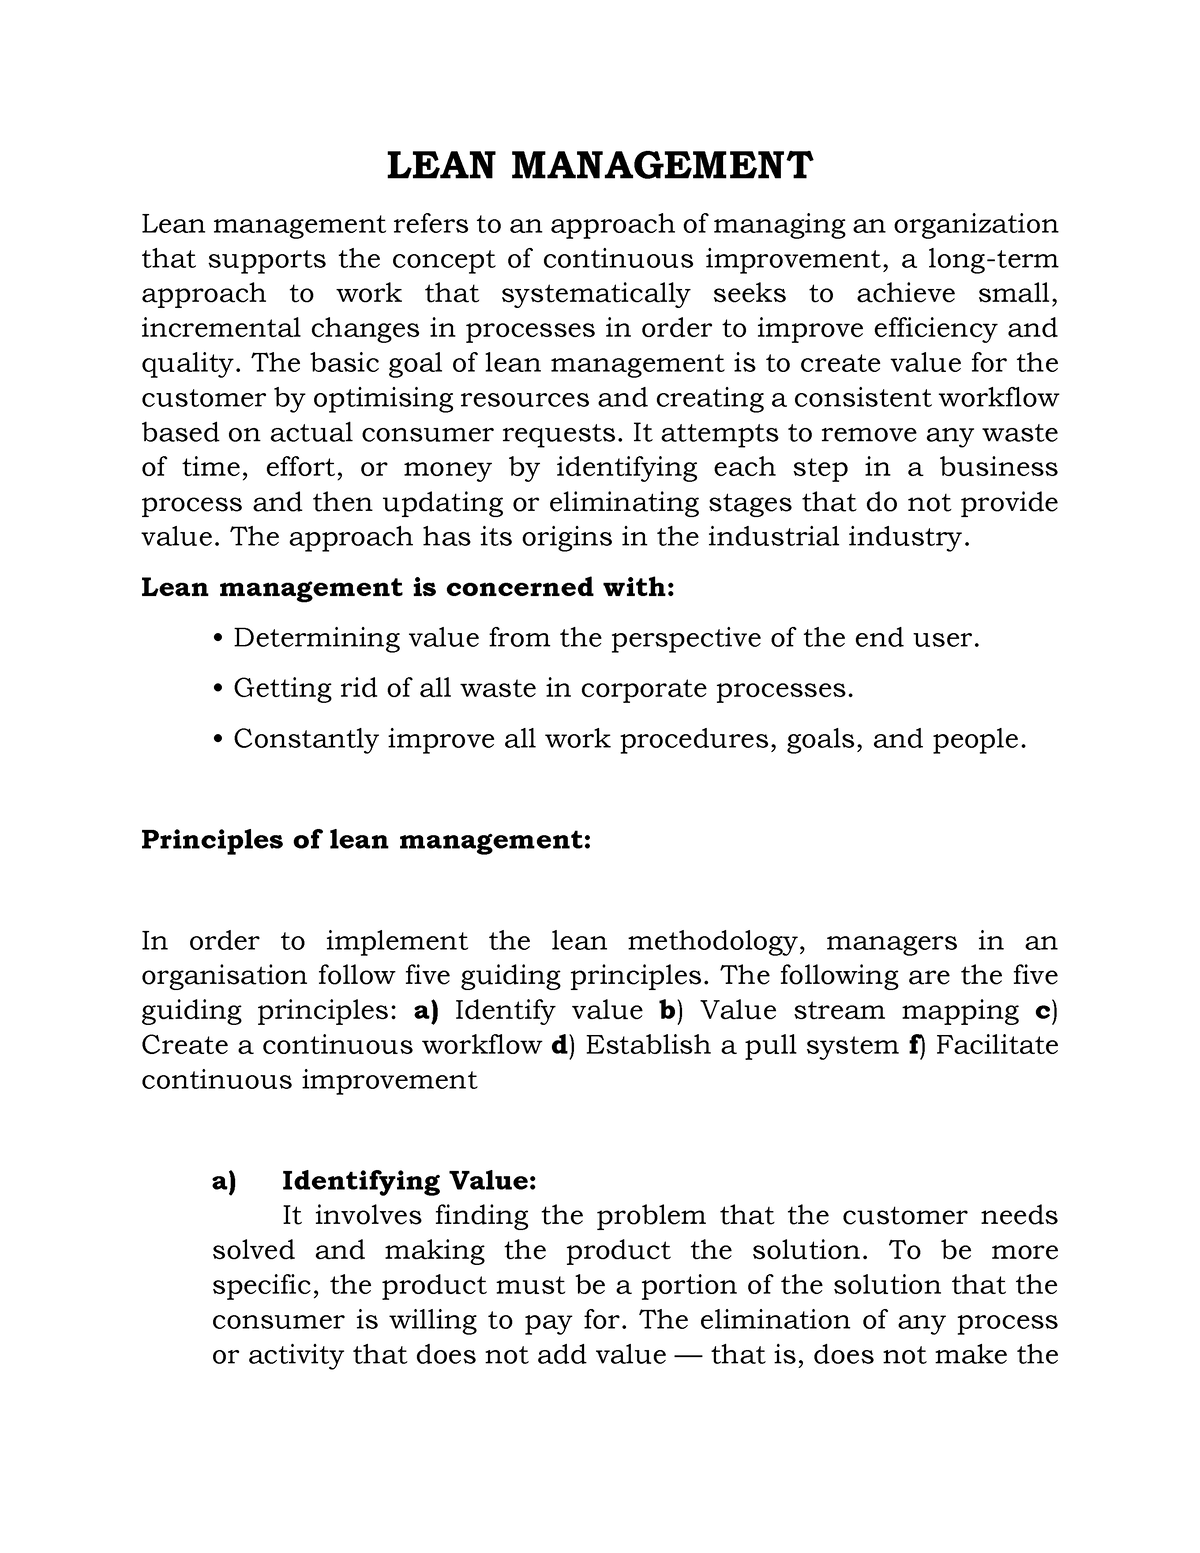 dissertation lean management